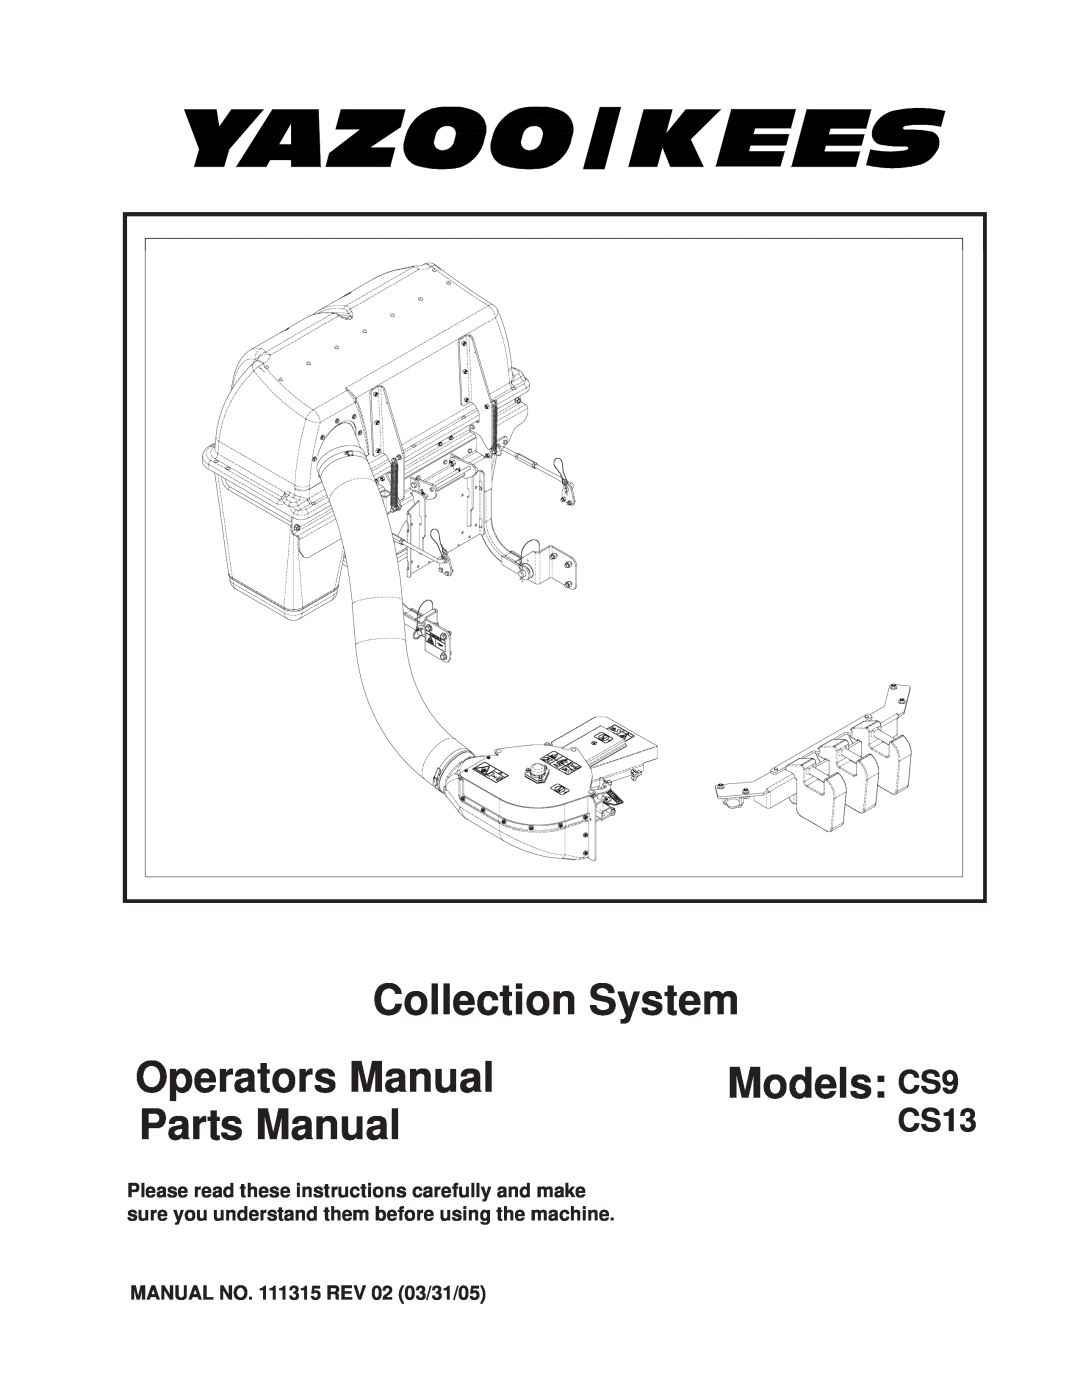 Yazoo/Kees CS13 manual Collection System, Operators Manual, Models CS9, Parts Manual 